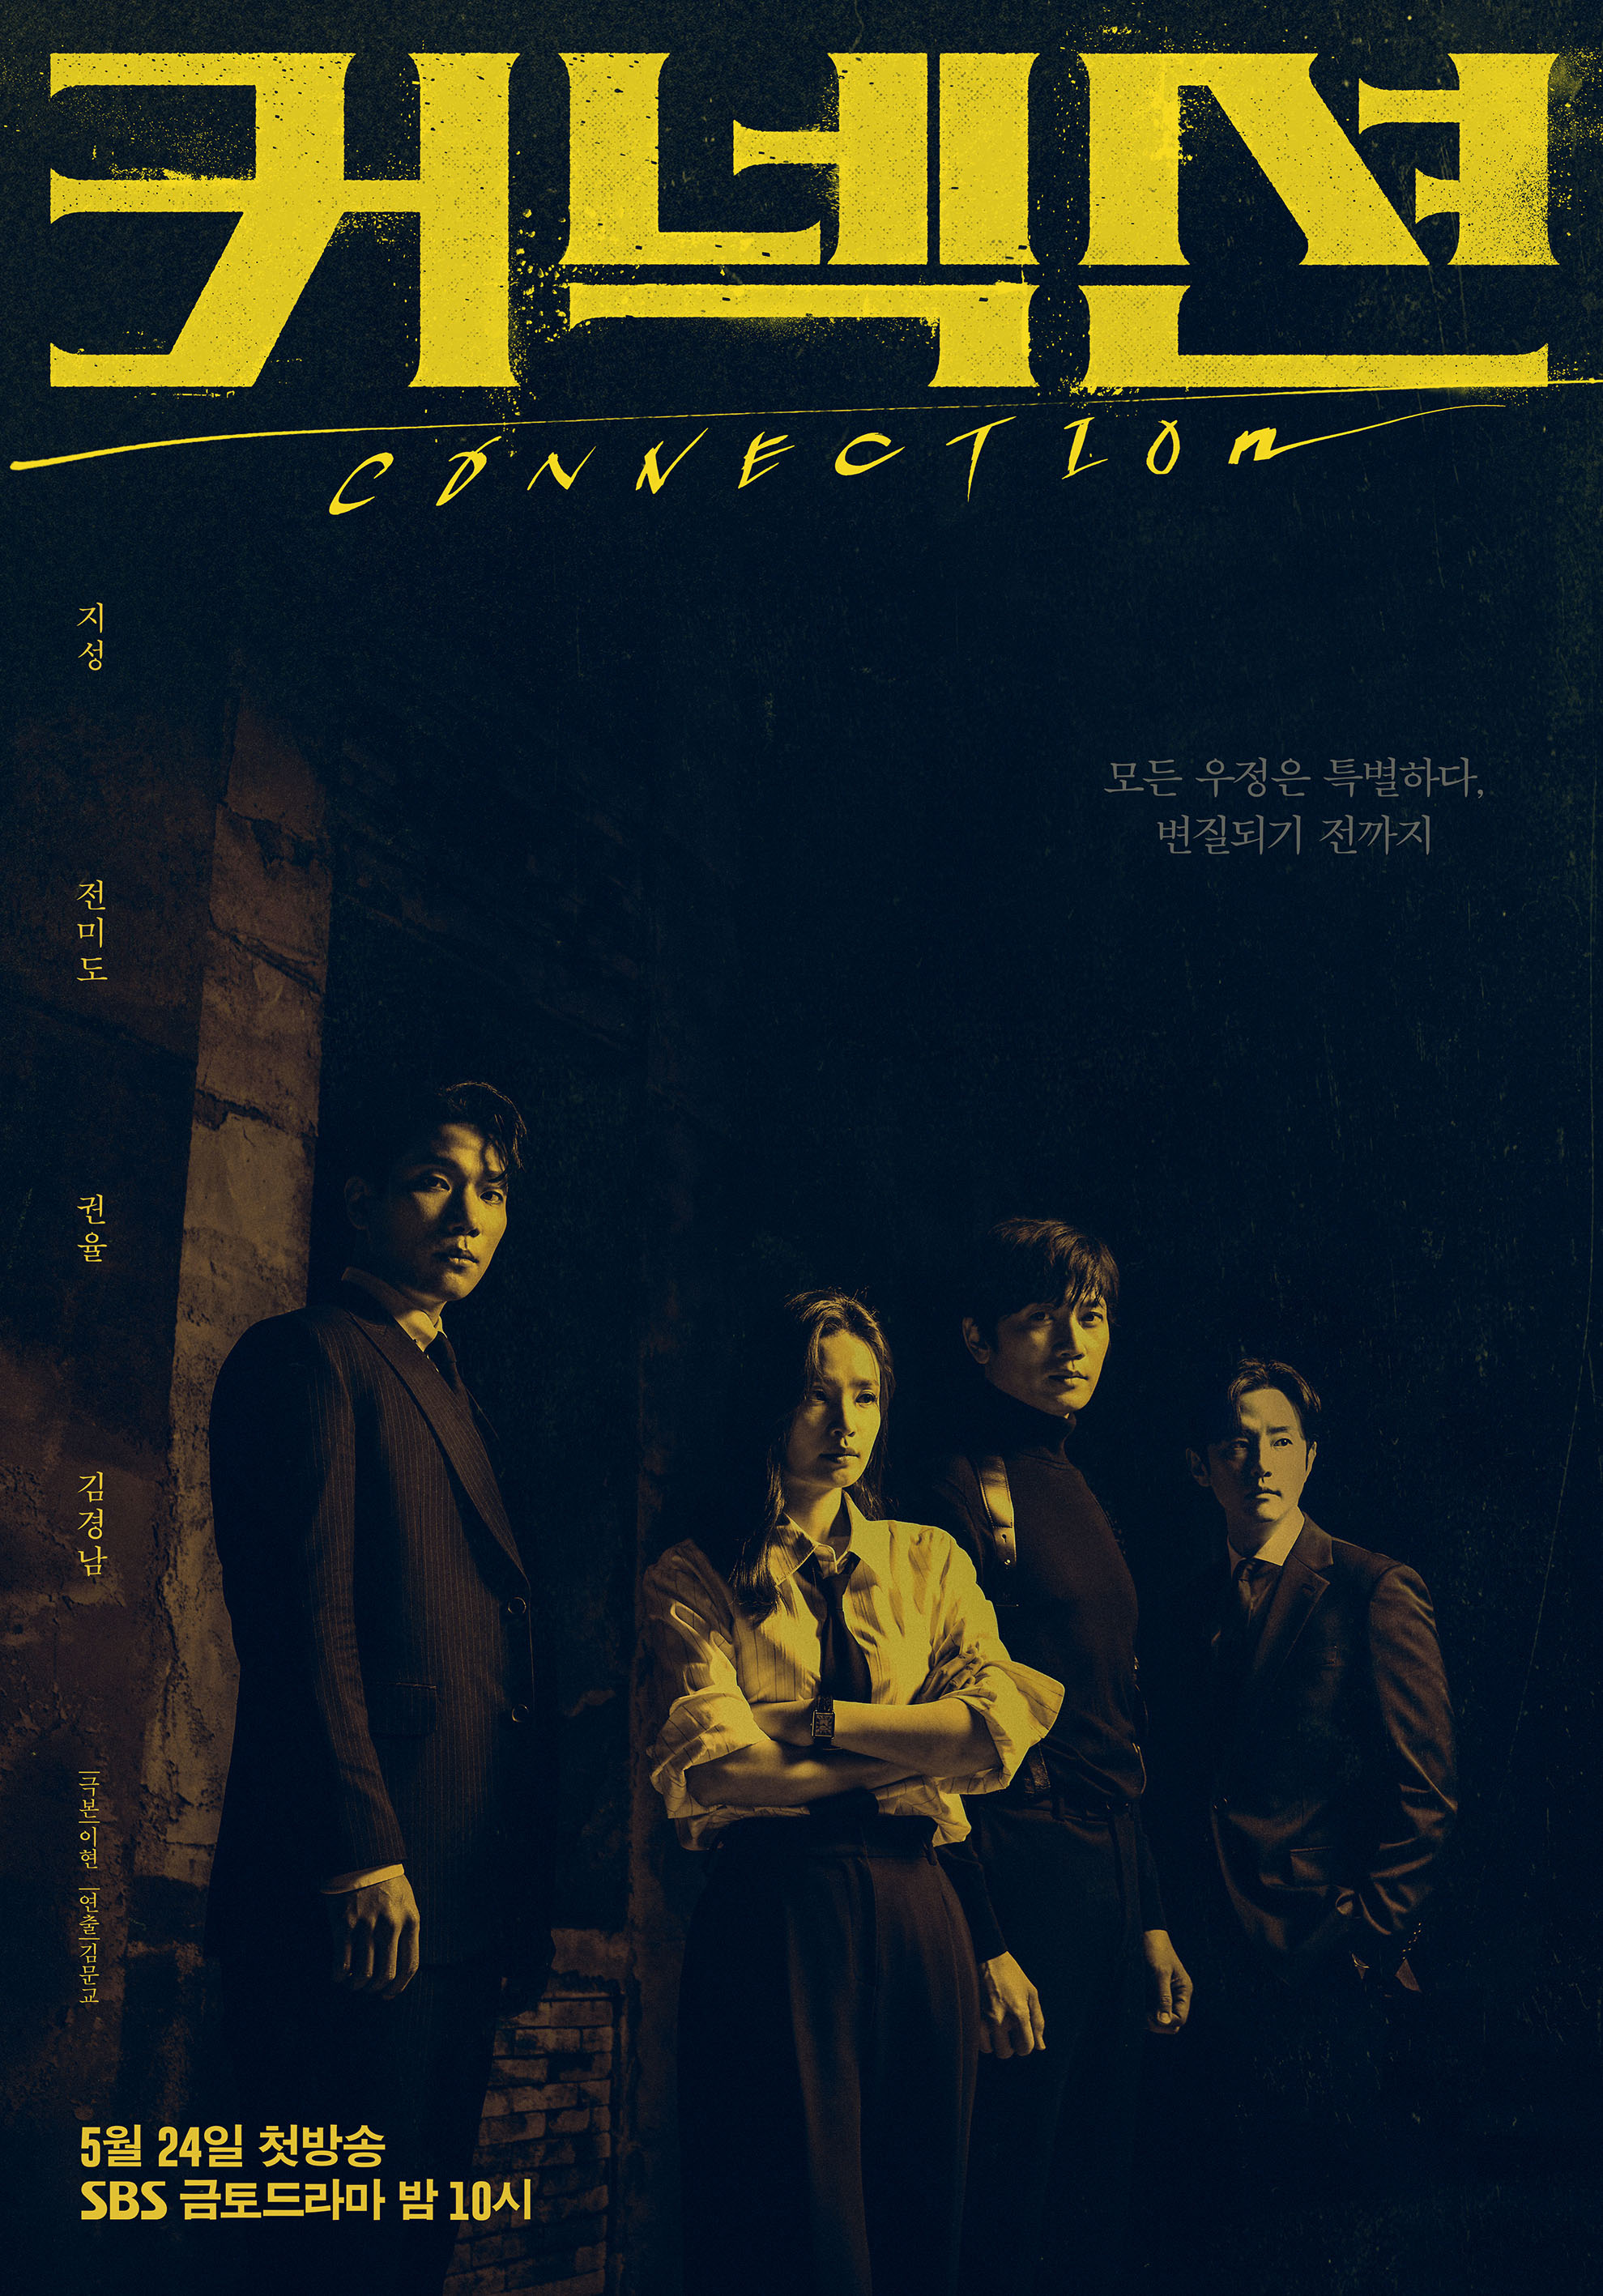 Ji Sung, Jeon Mi Do, Kwon Yool, And Kim Kyung Nam Are Former High School Classmates In “Connection”